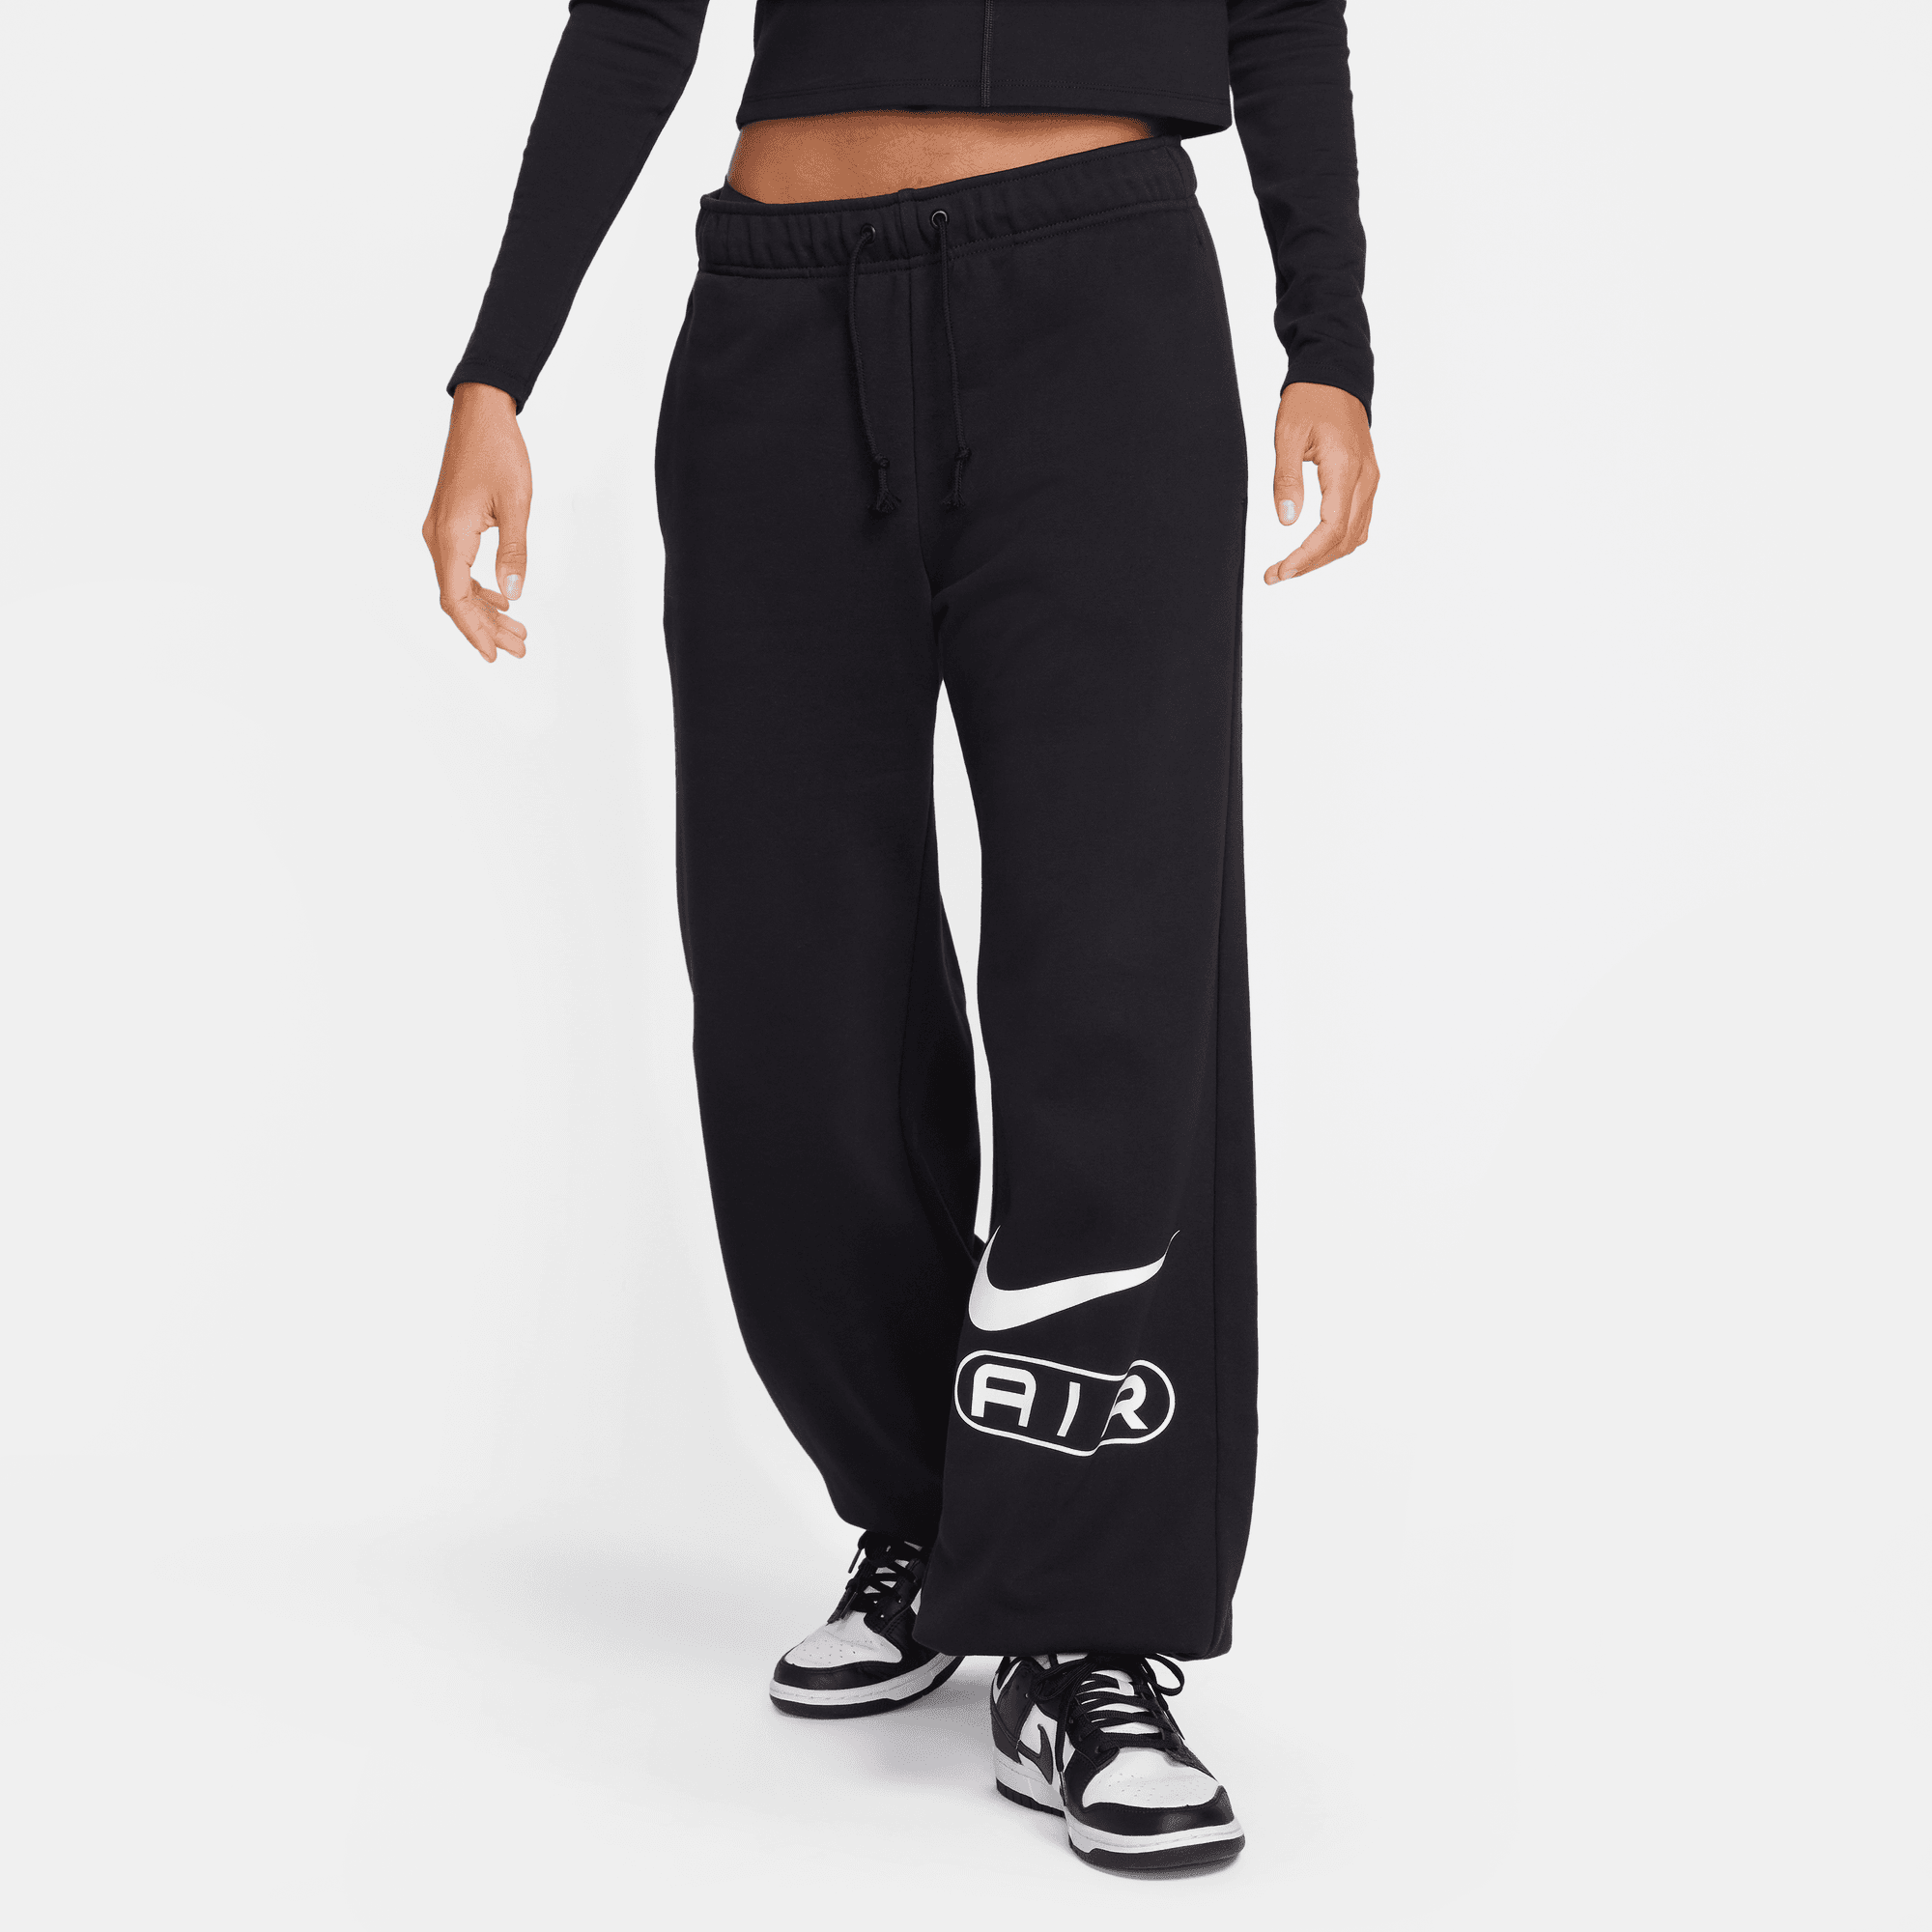 Women's black sweatpants Nike